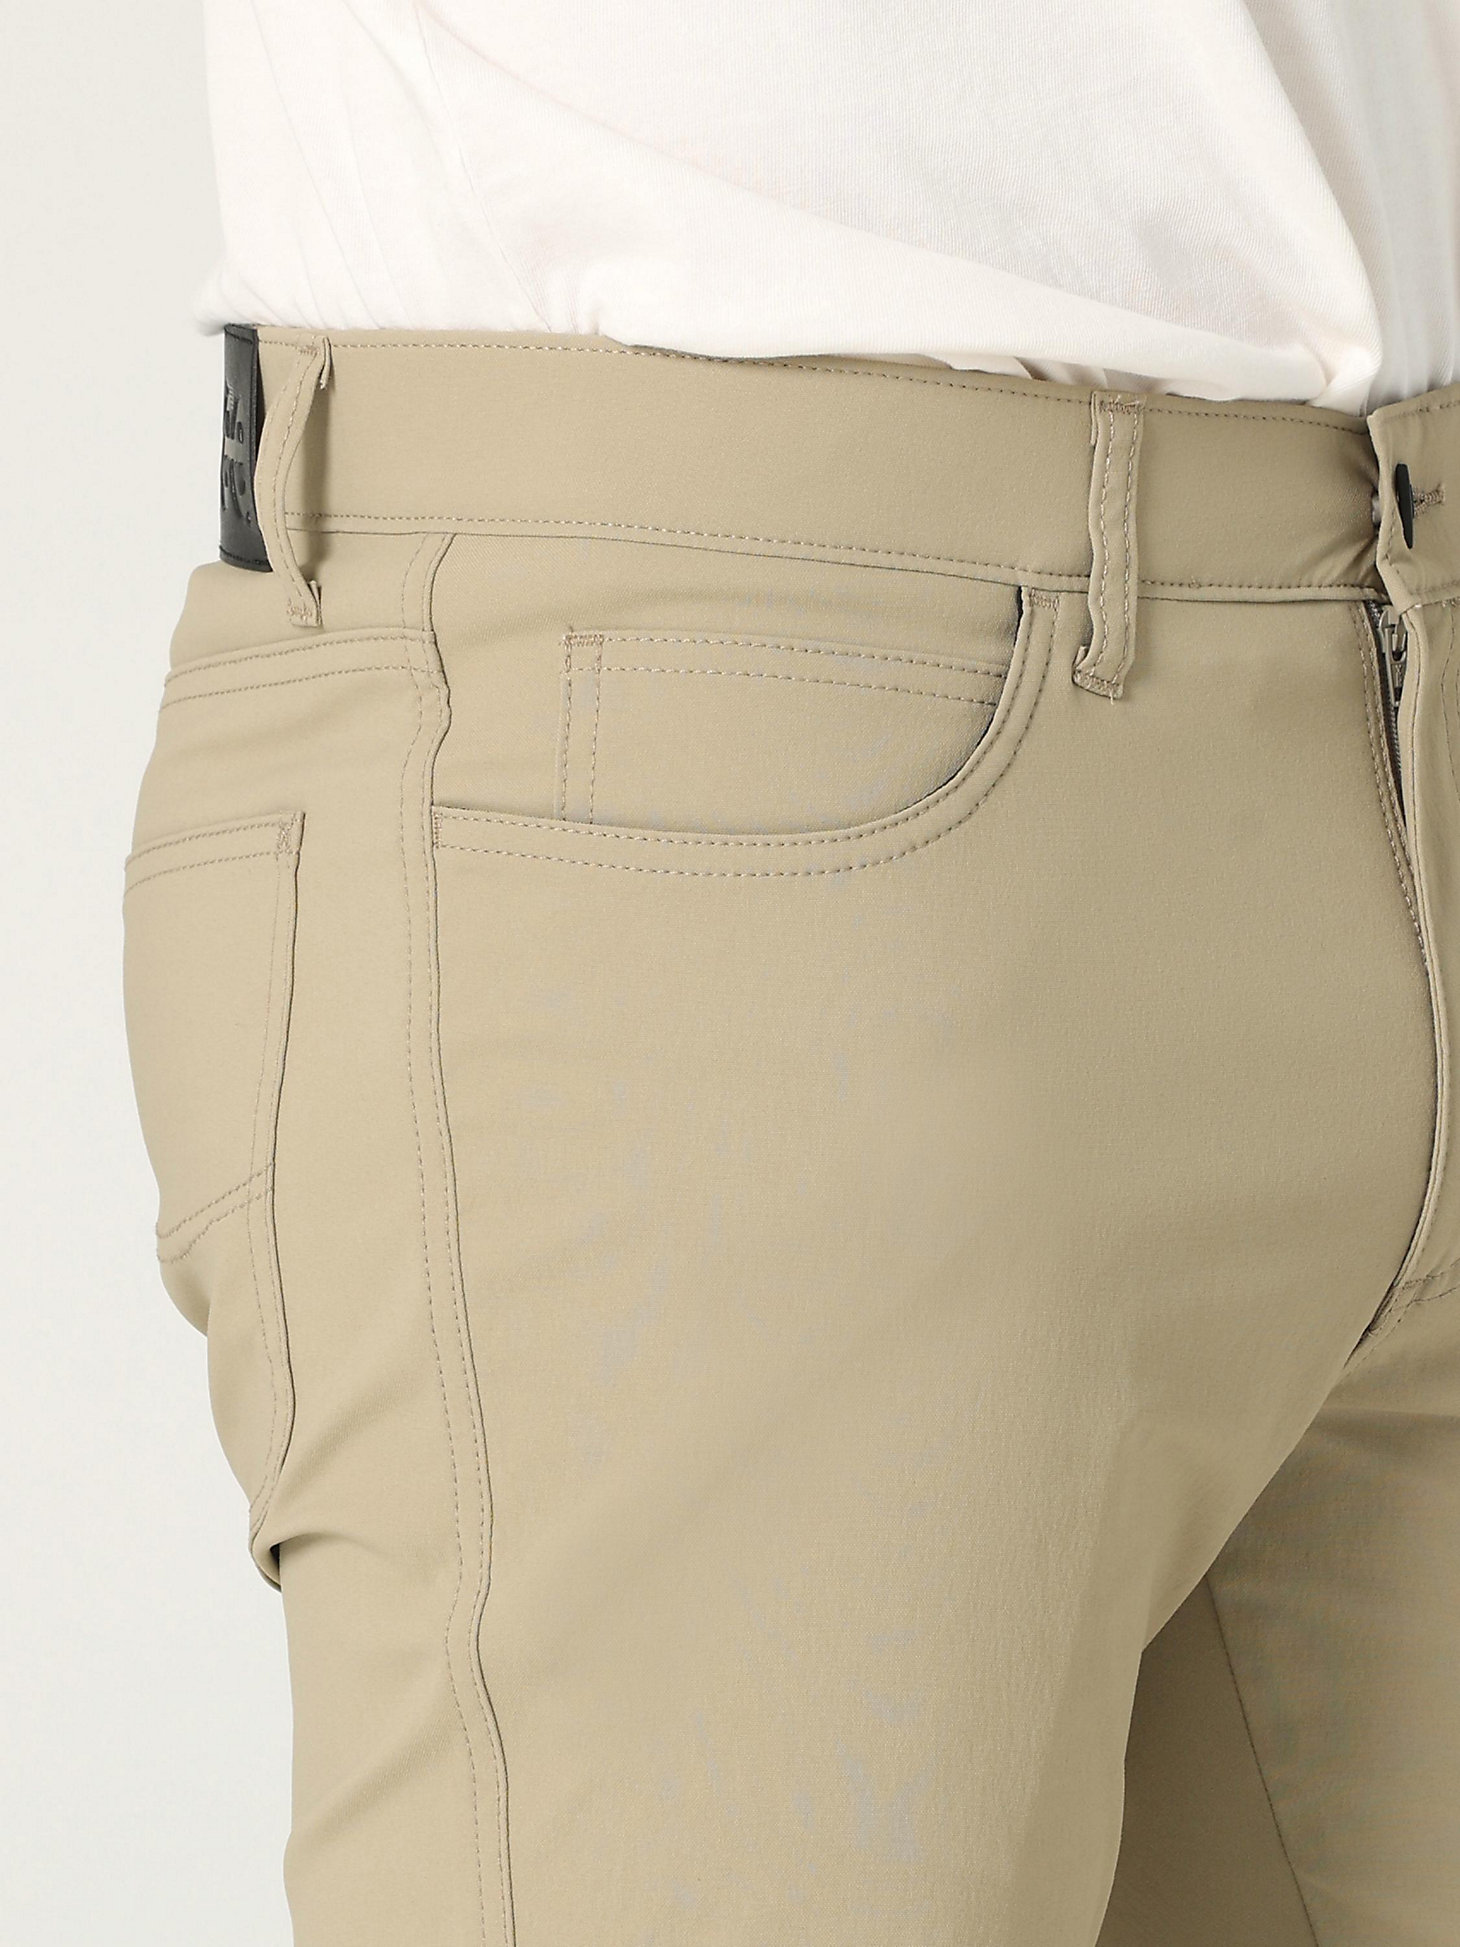 Men's Extreme Motion Slim Fit Synthetic Pant in Kansas Khaki alternative view 3